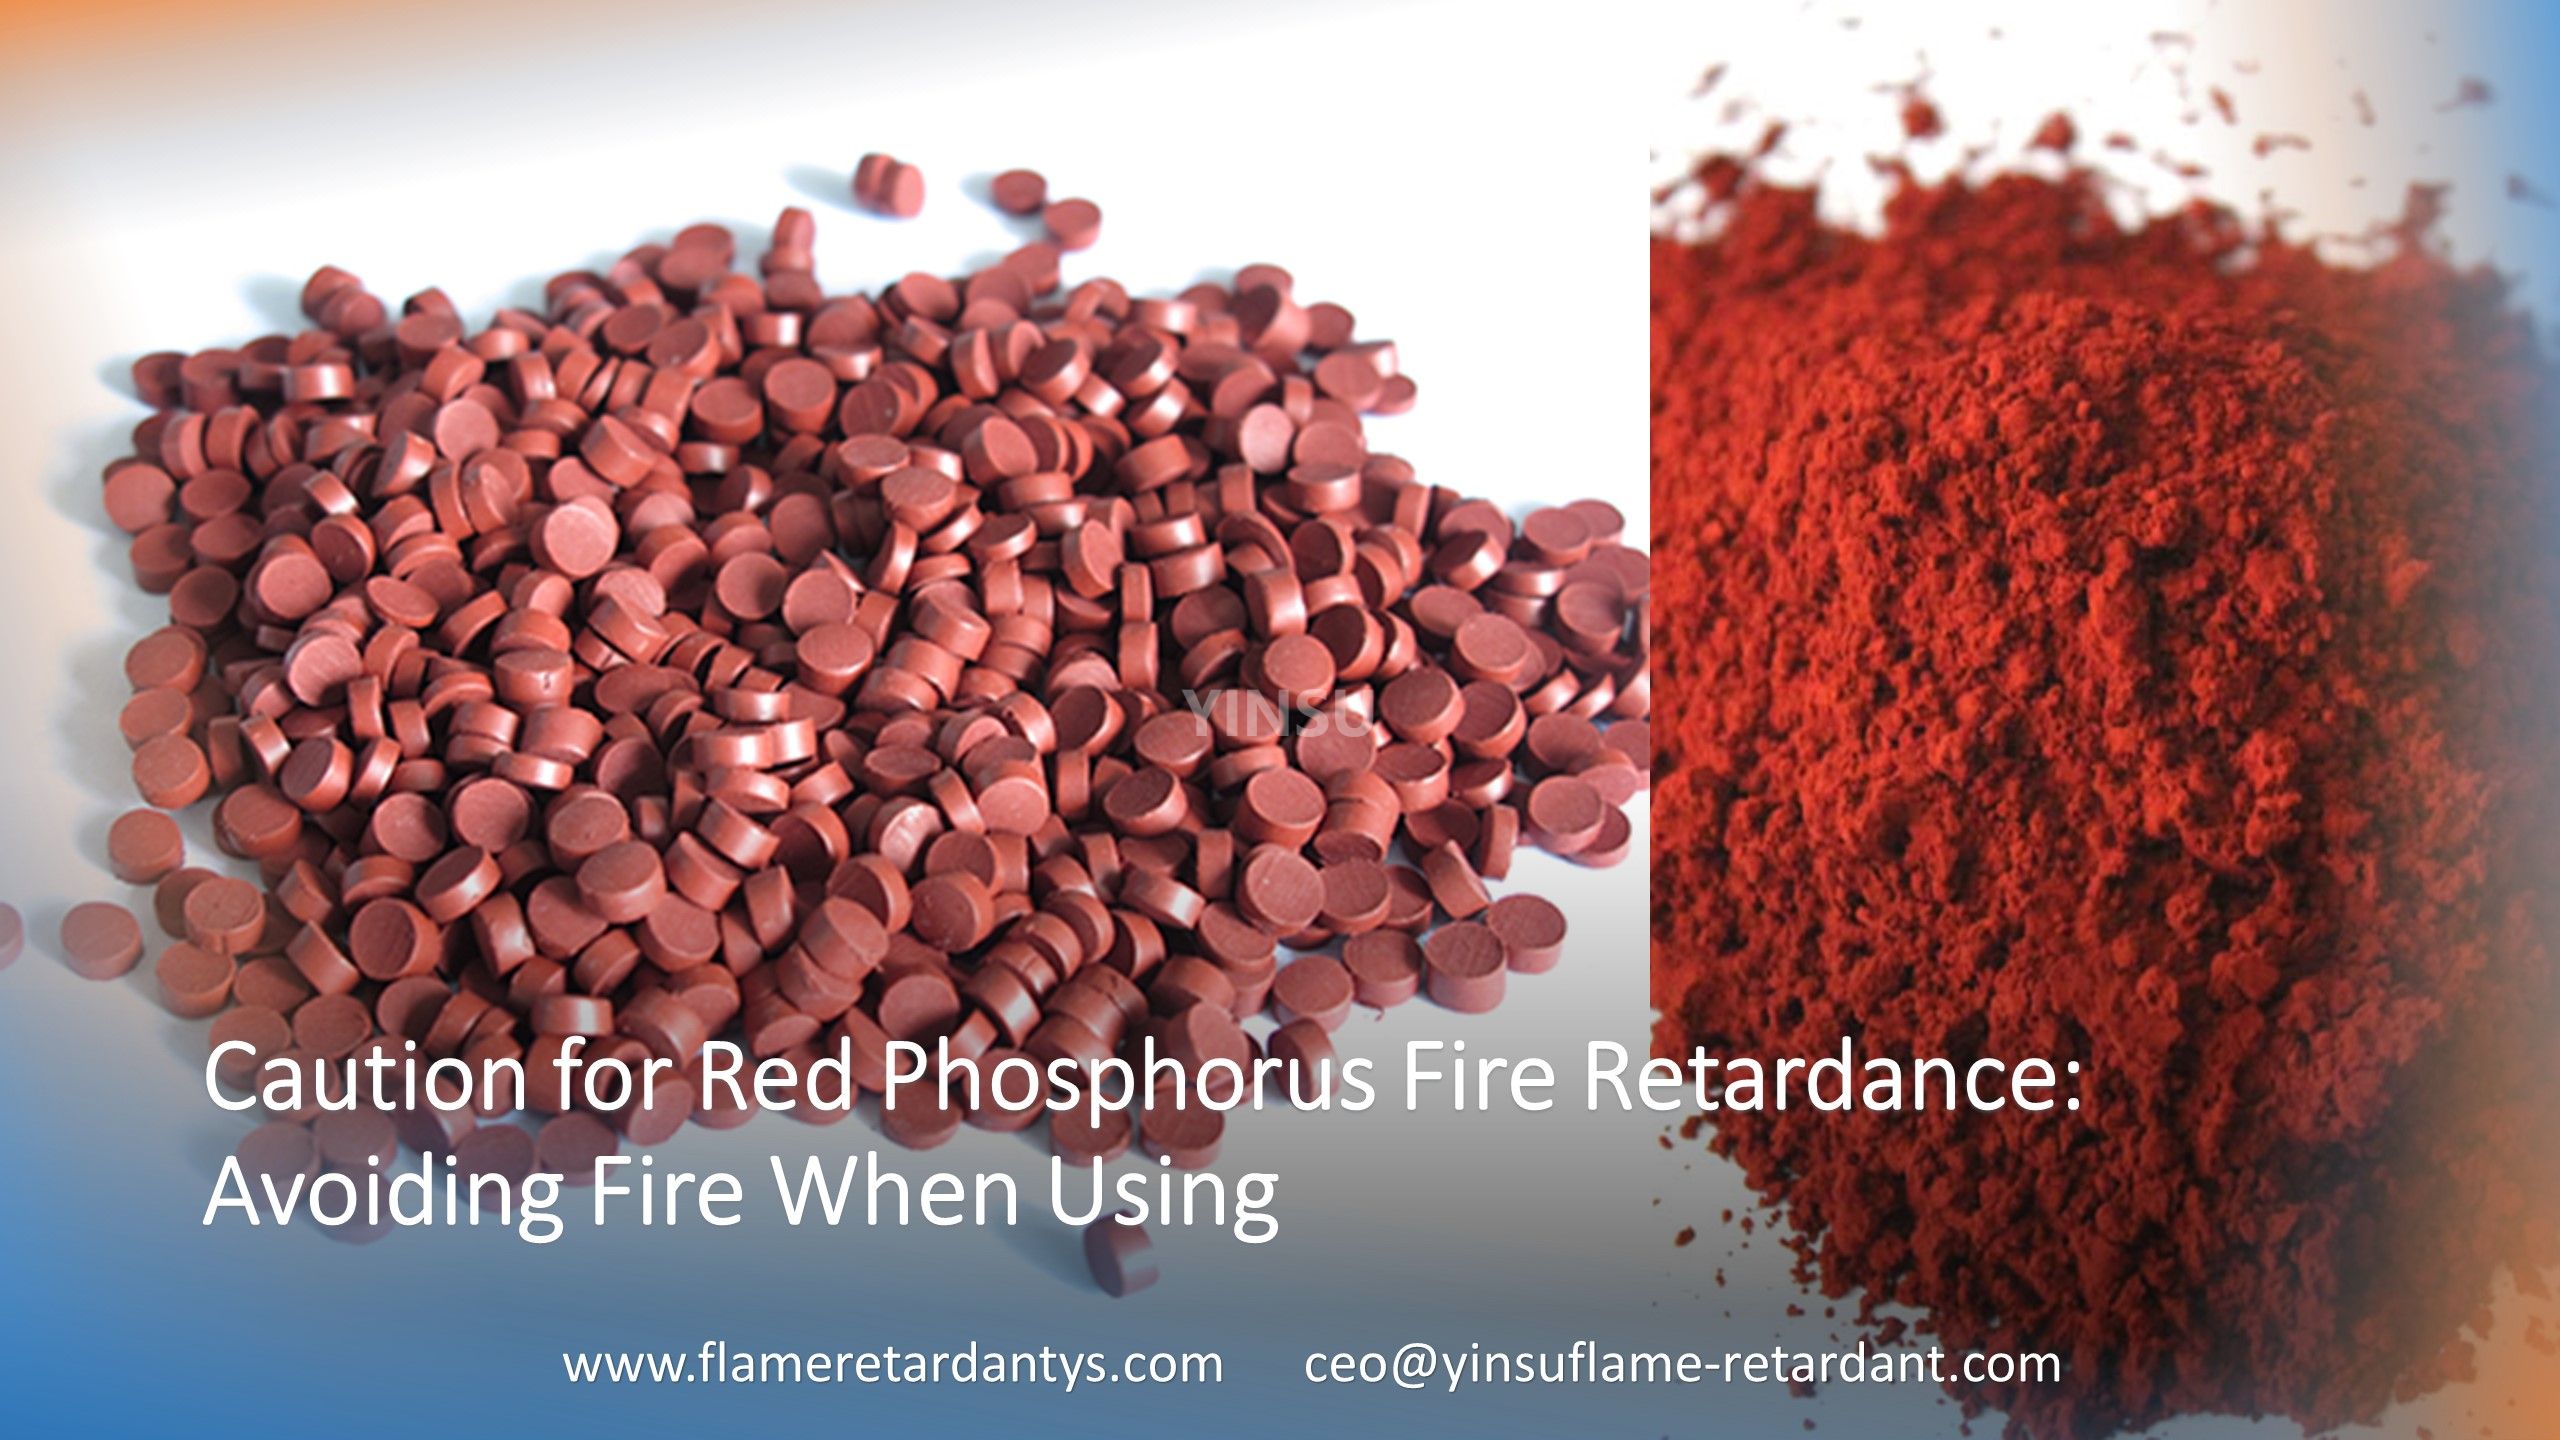 Caution for Red Phosphorus Fire Retardance: Avoiding Fire When Using